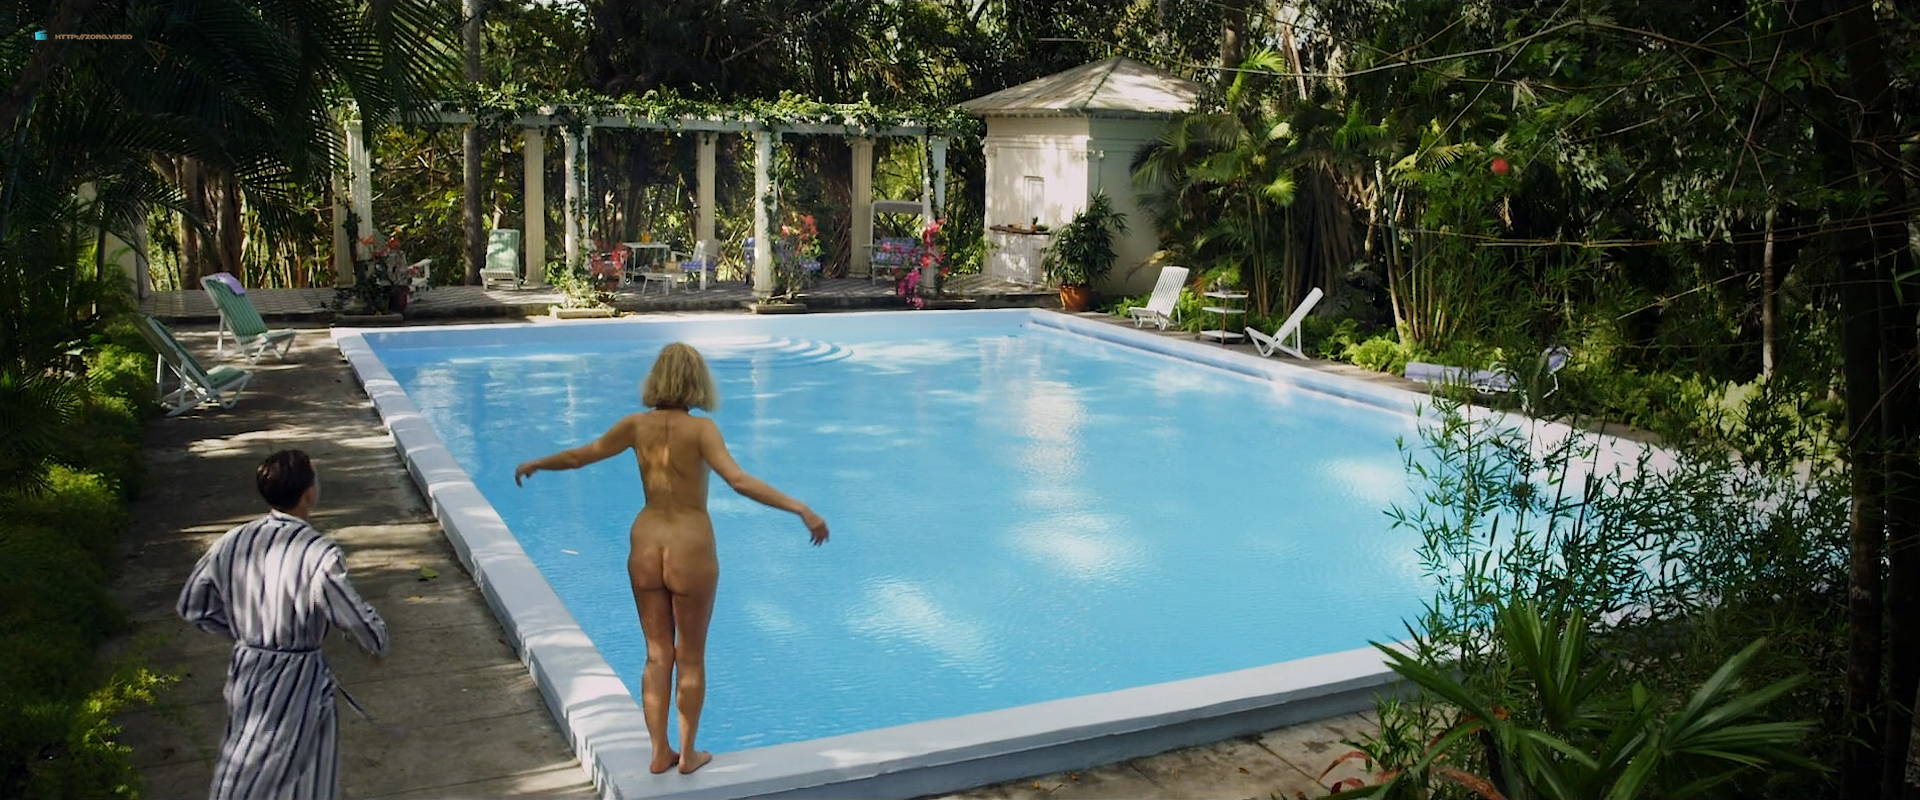 Minka Kelly nude butt Joely Richardson nude and skinny dipping - Papa Hemingway in Cuba (2015) HD 1080p web (4)